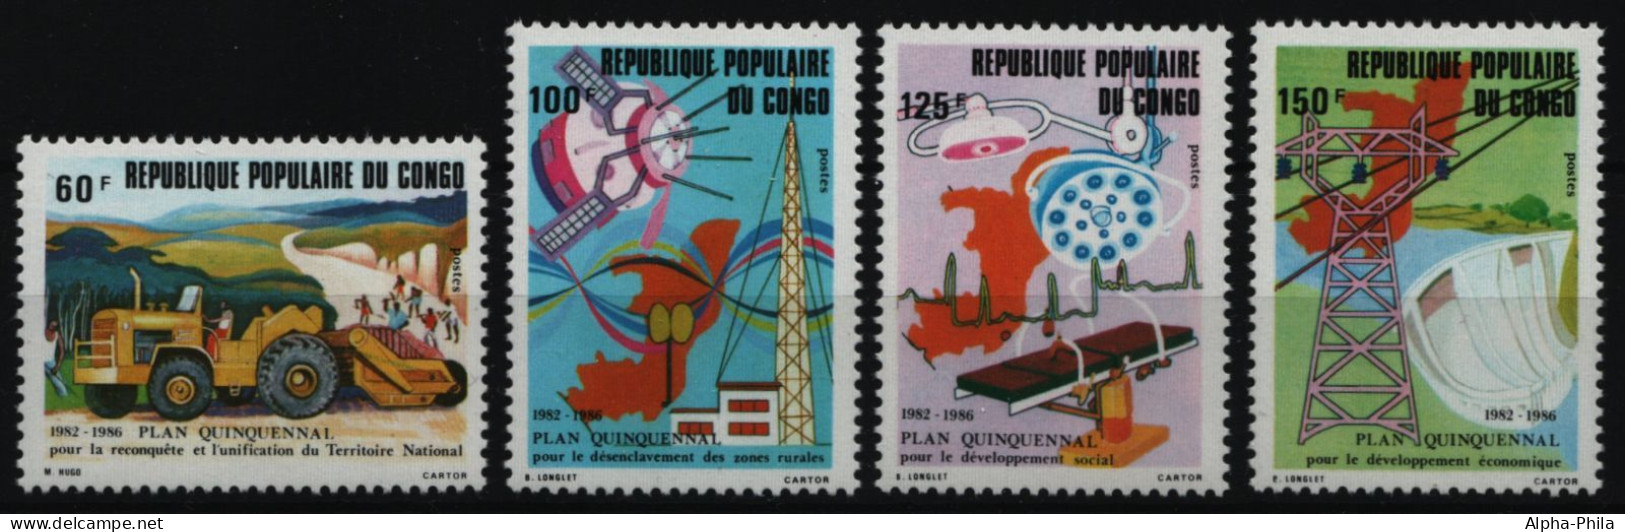 Kongo-Brazzaville 1982 - Mi-Nr. 870-873 ** - MNH - Fünfjahresplan - Mint/hinged